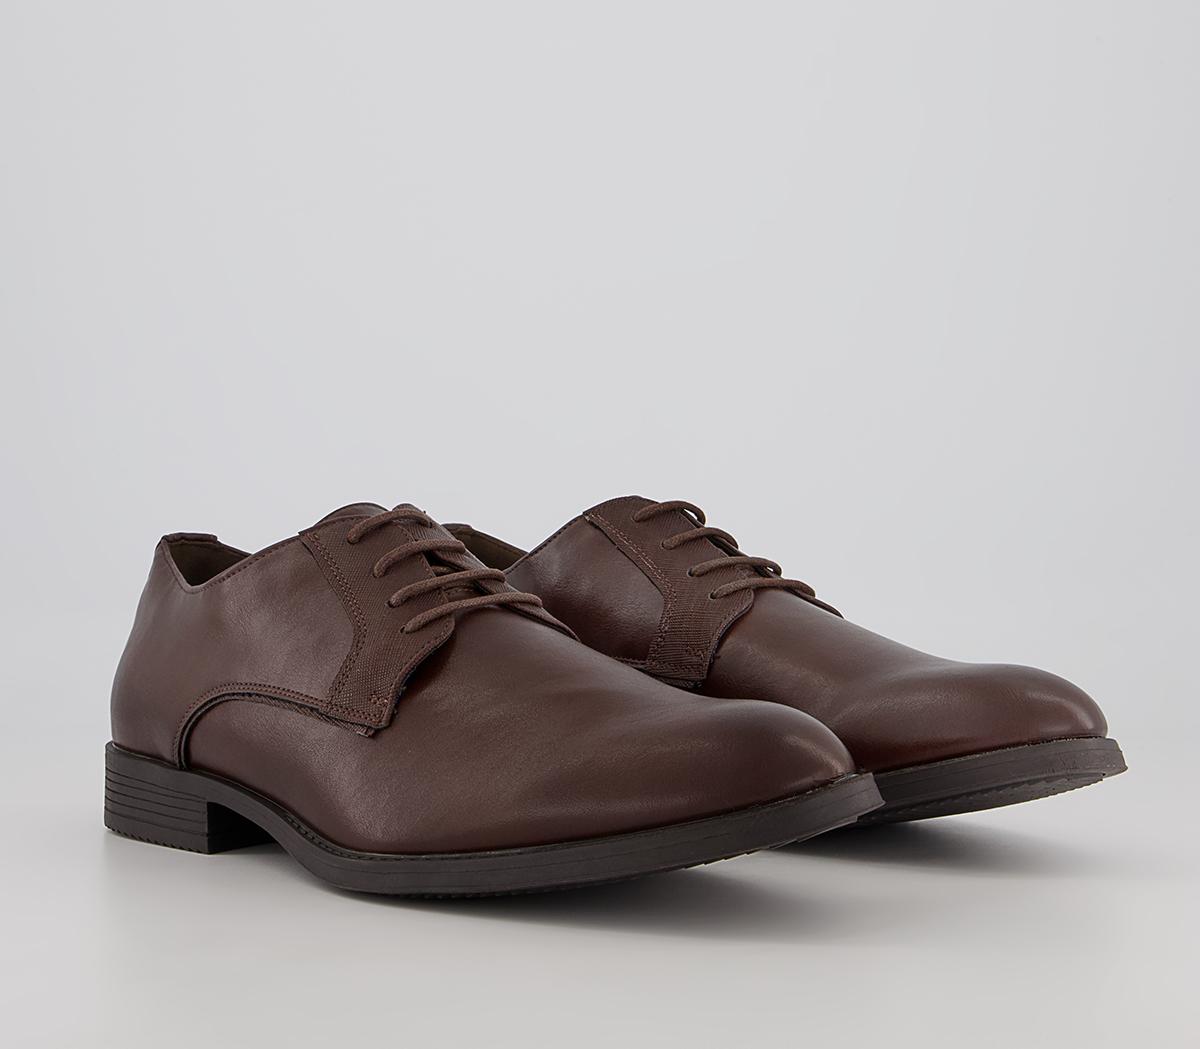 OFFICE Maldon Round Toe Derby Shoes Brown - Men’s Smart Shoes